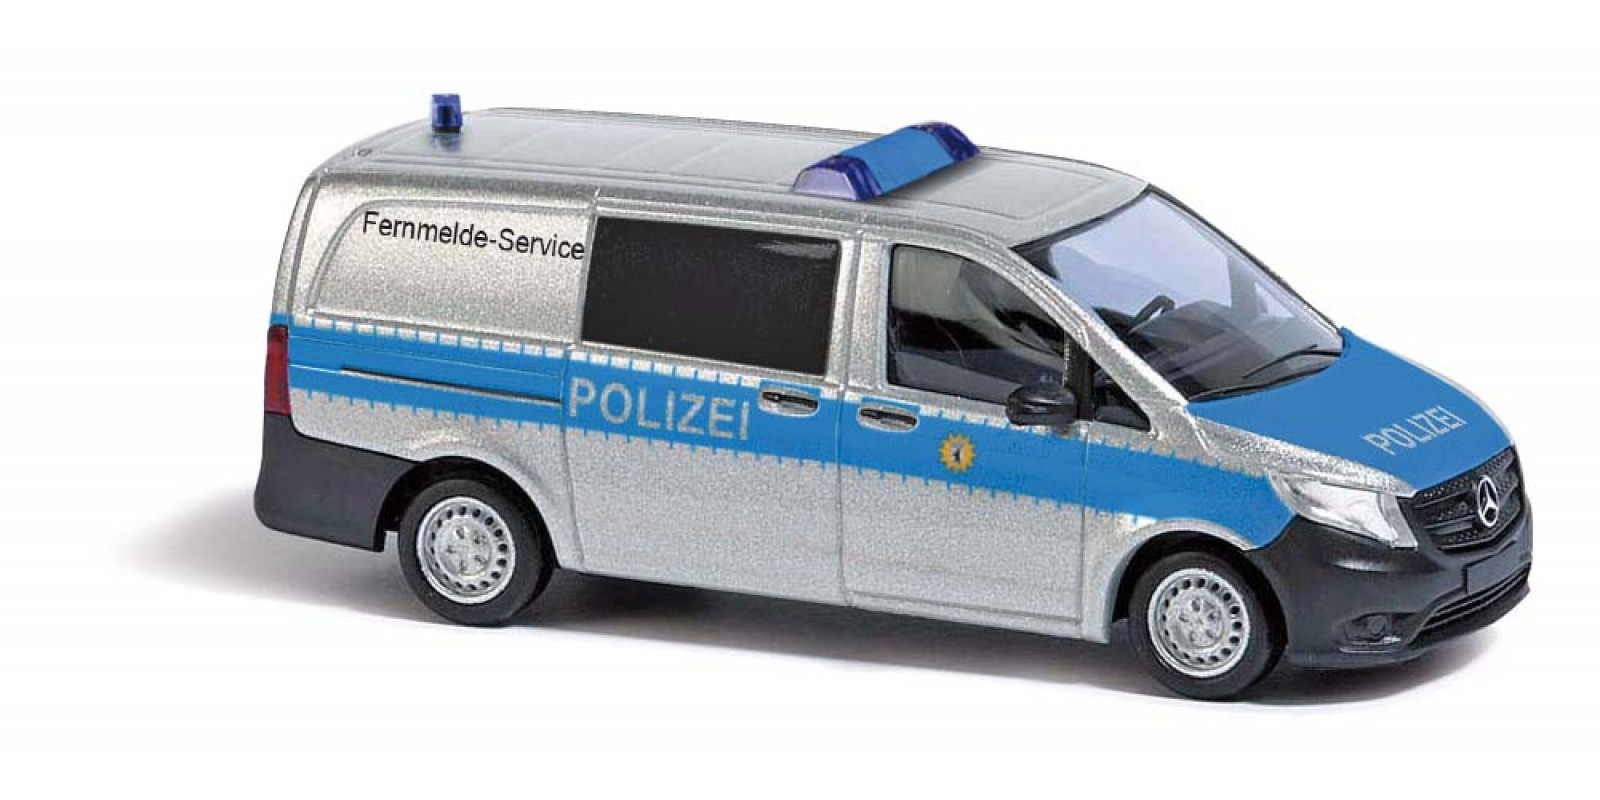 BU51188 MB Vito,Polizei Berlin Fernmelde-Service